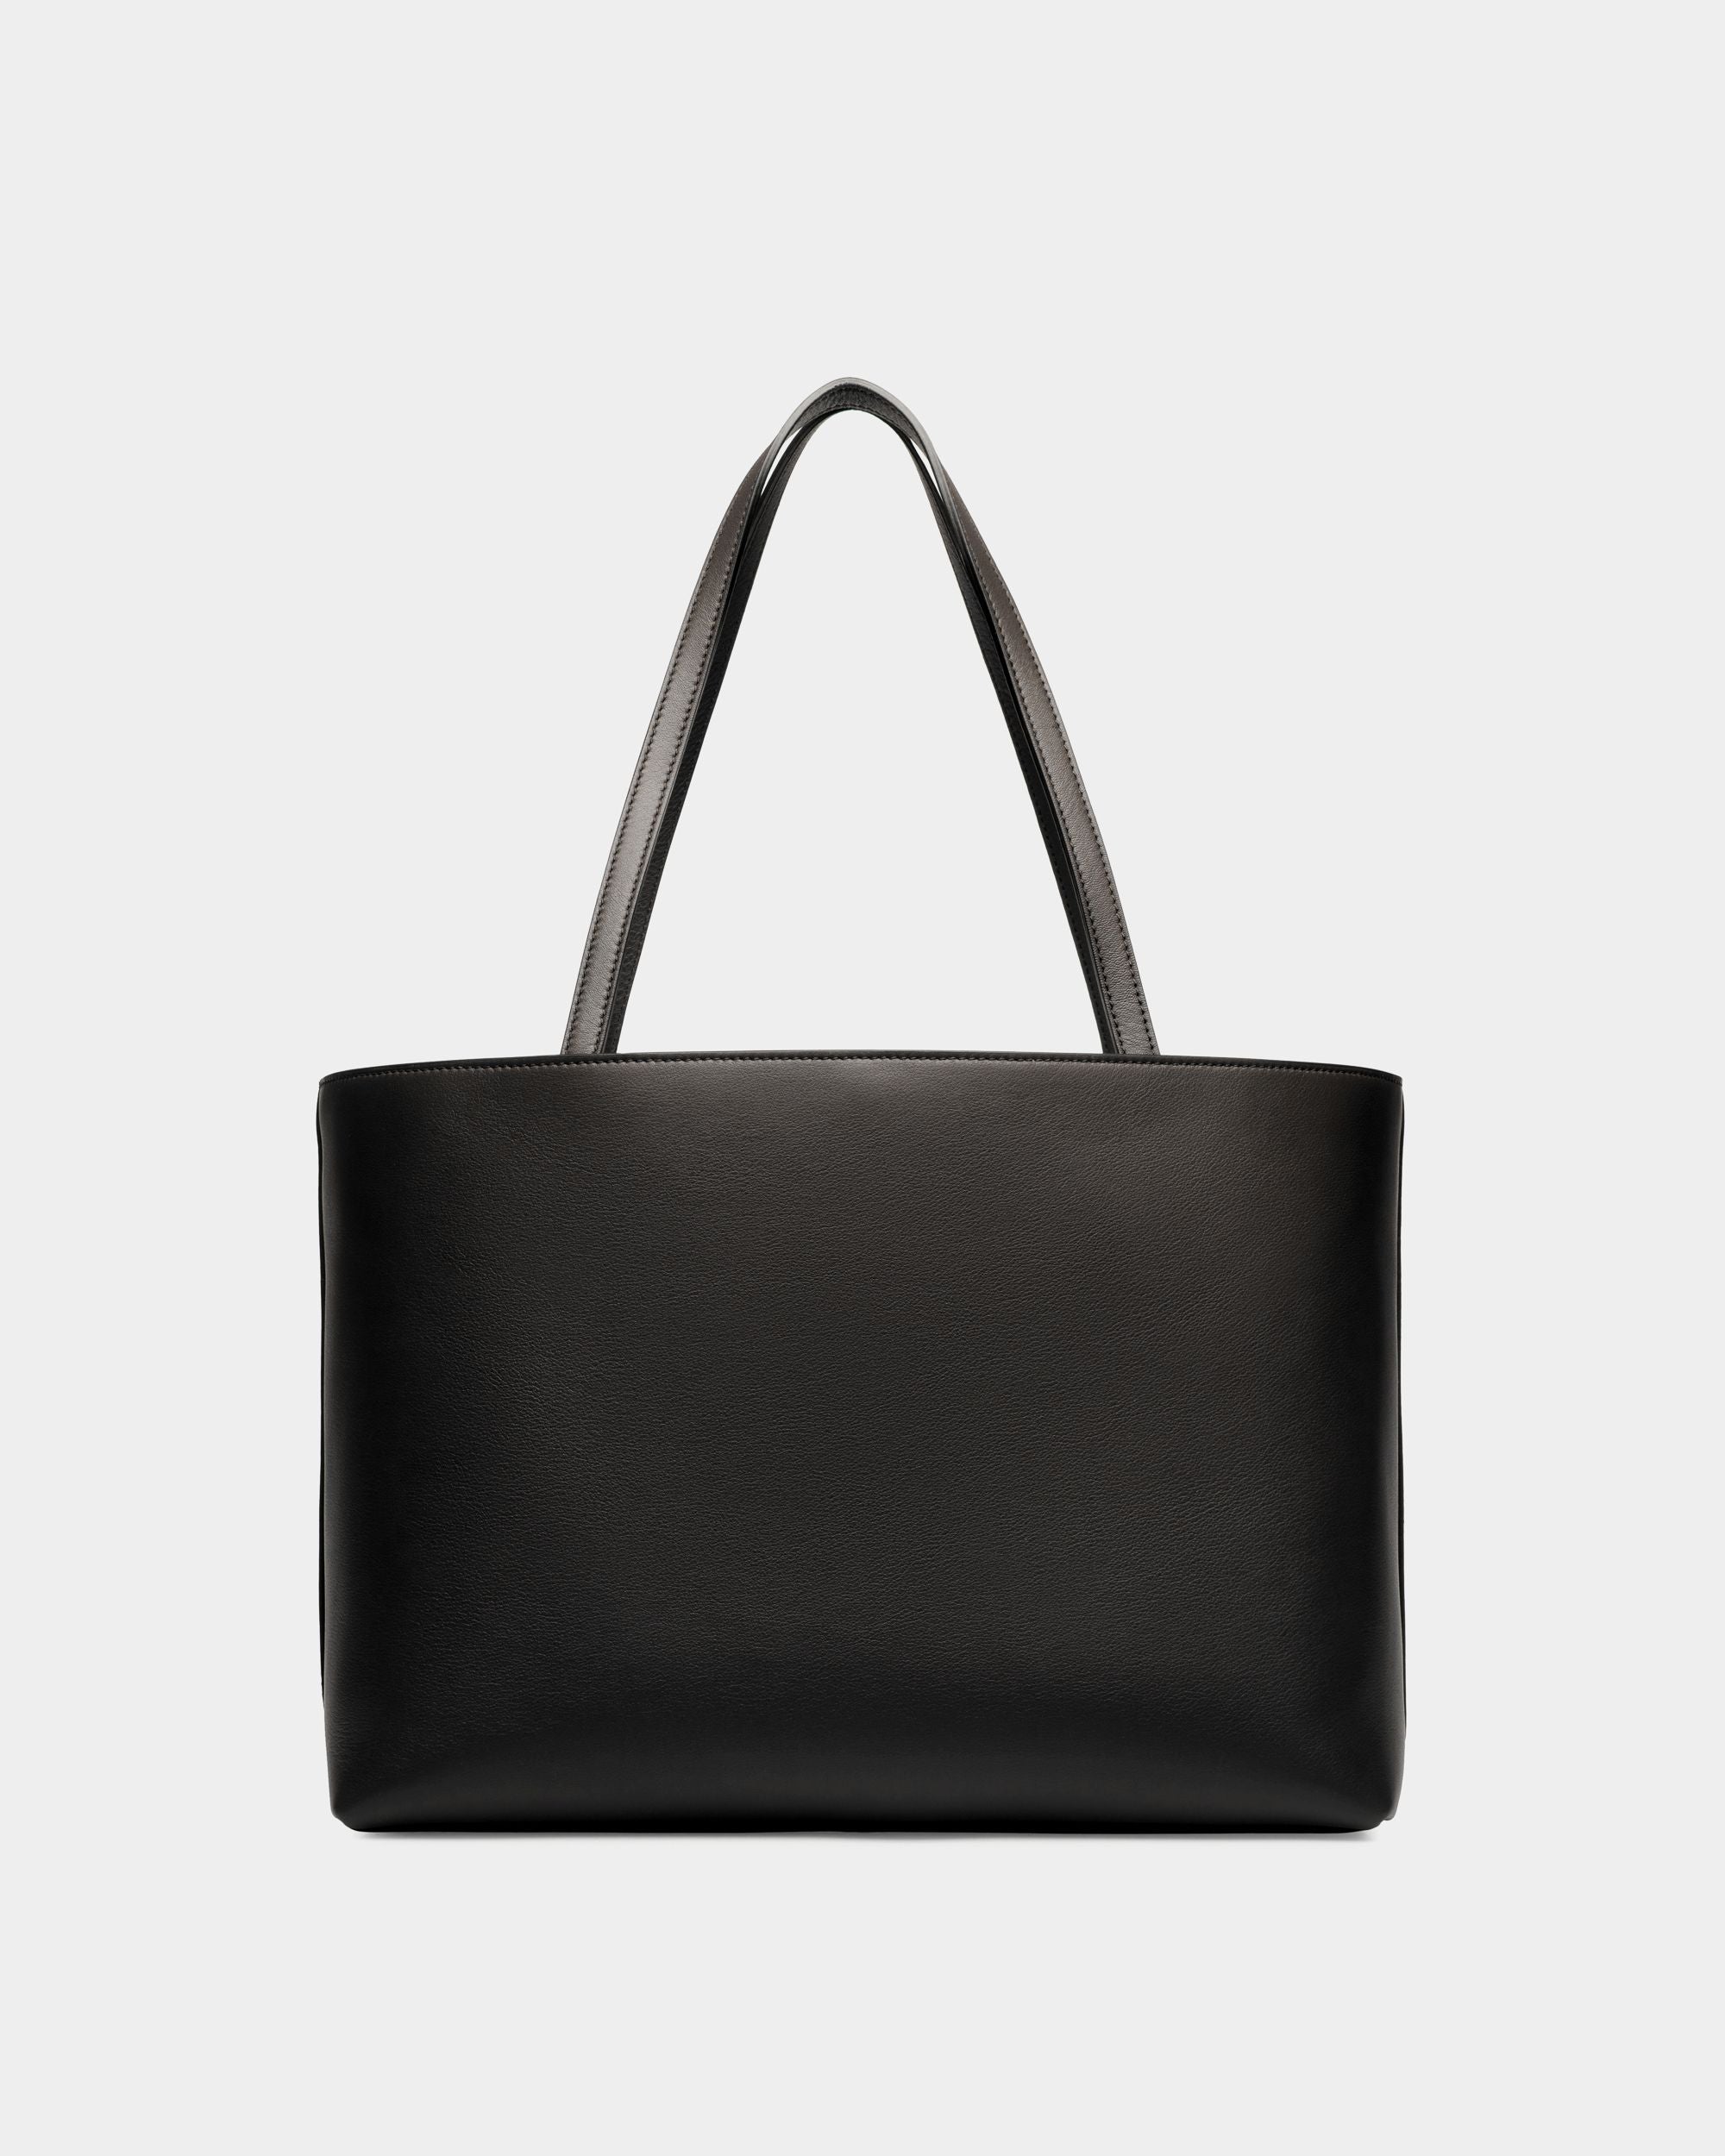 Bally Spell | Women's Tote Bag in Black Leather | Bally | Still Life Back